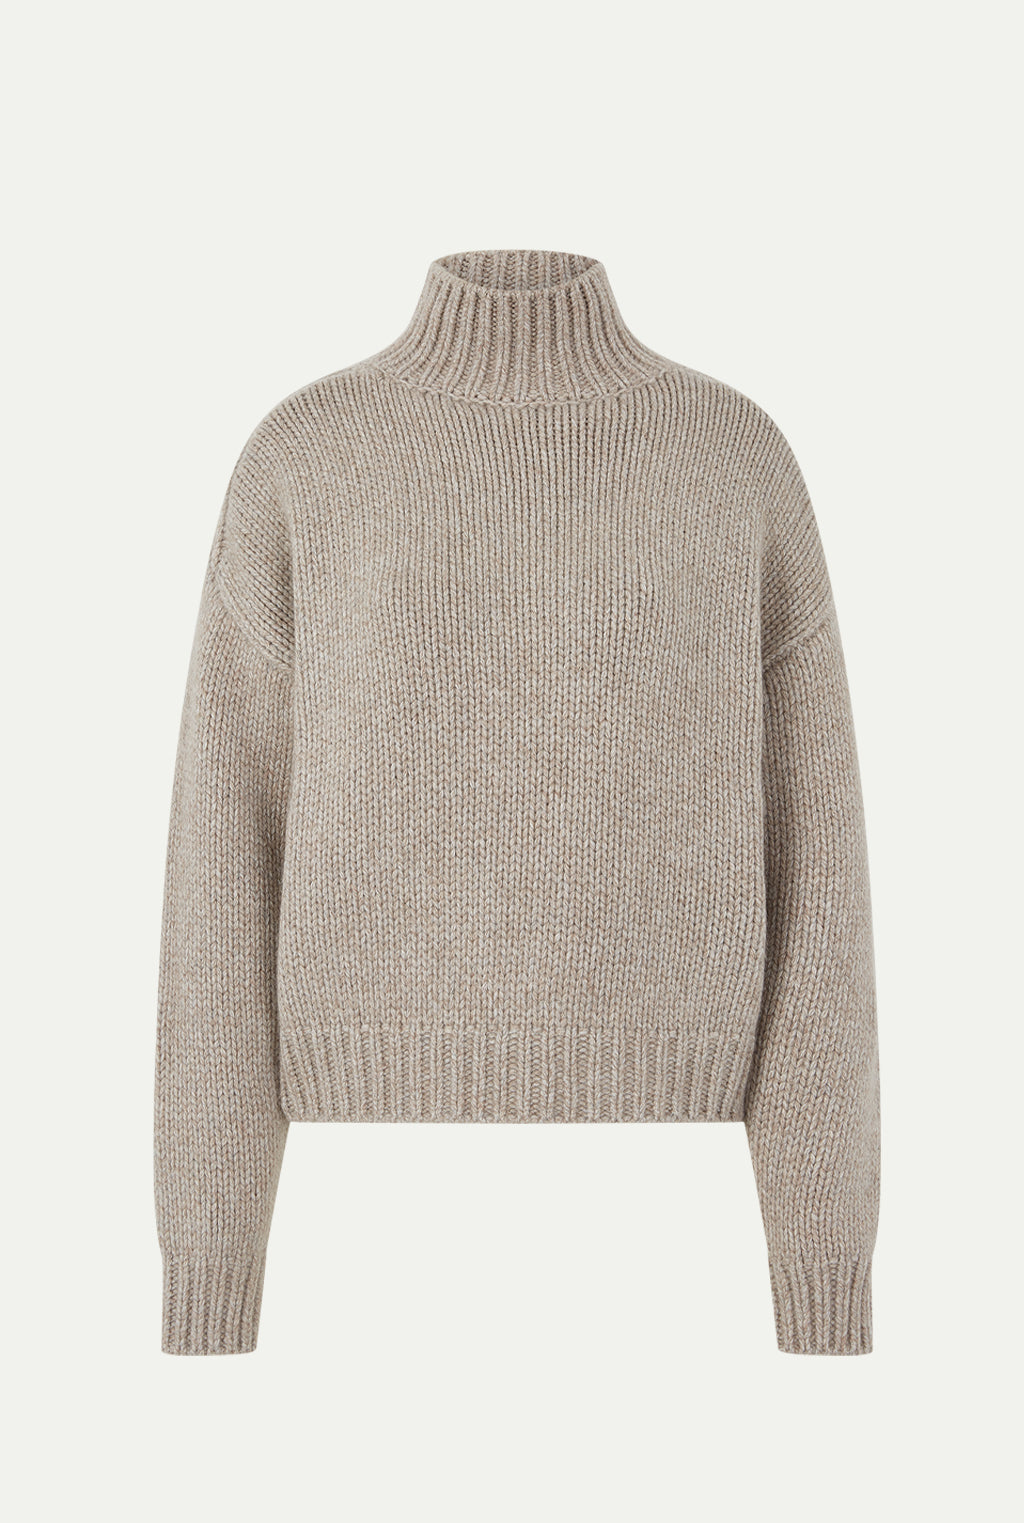 DAMAK cashmere sweater